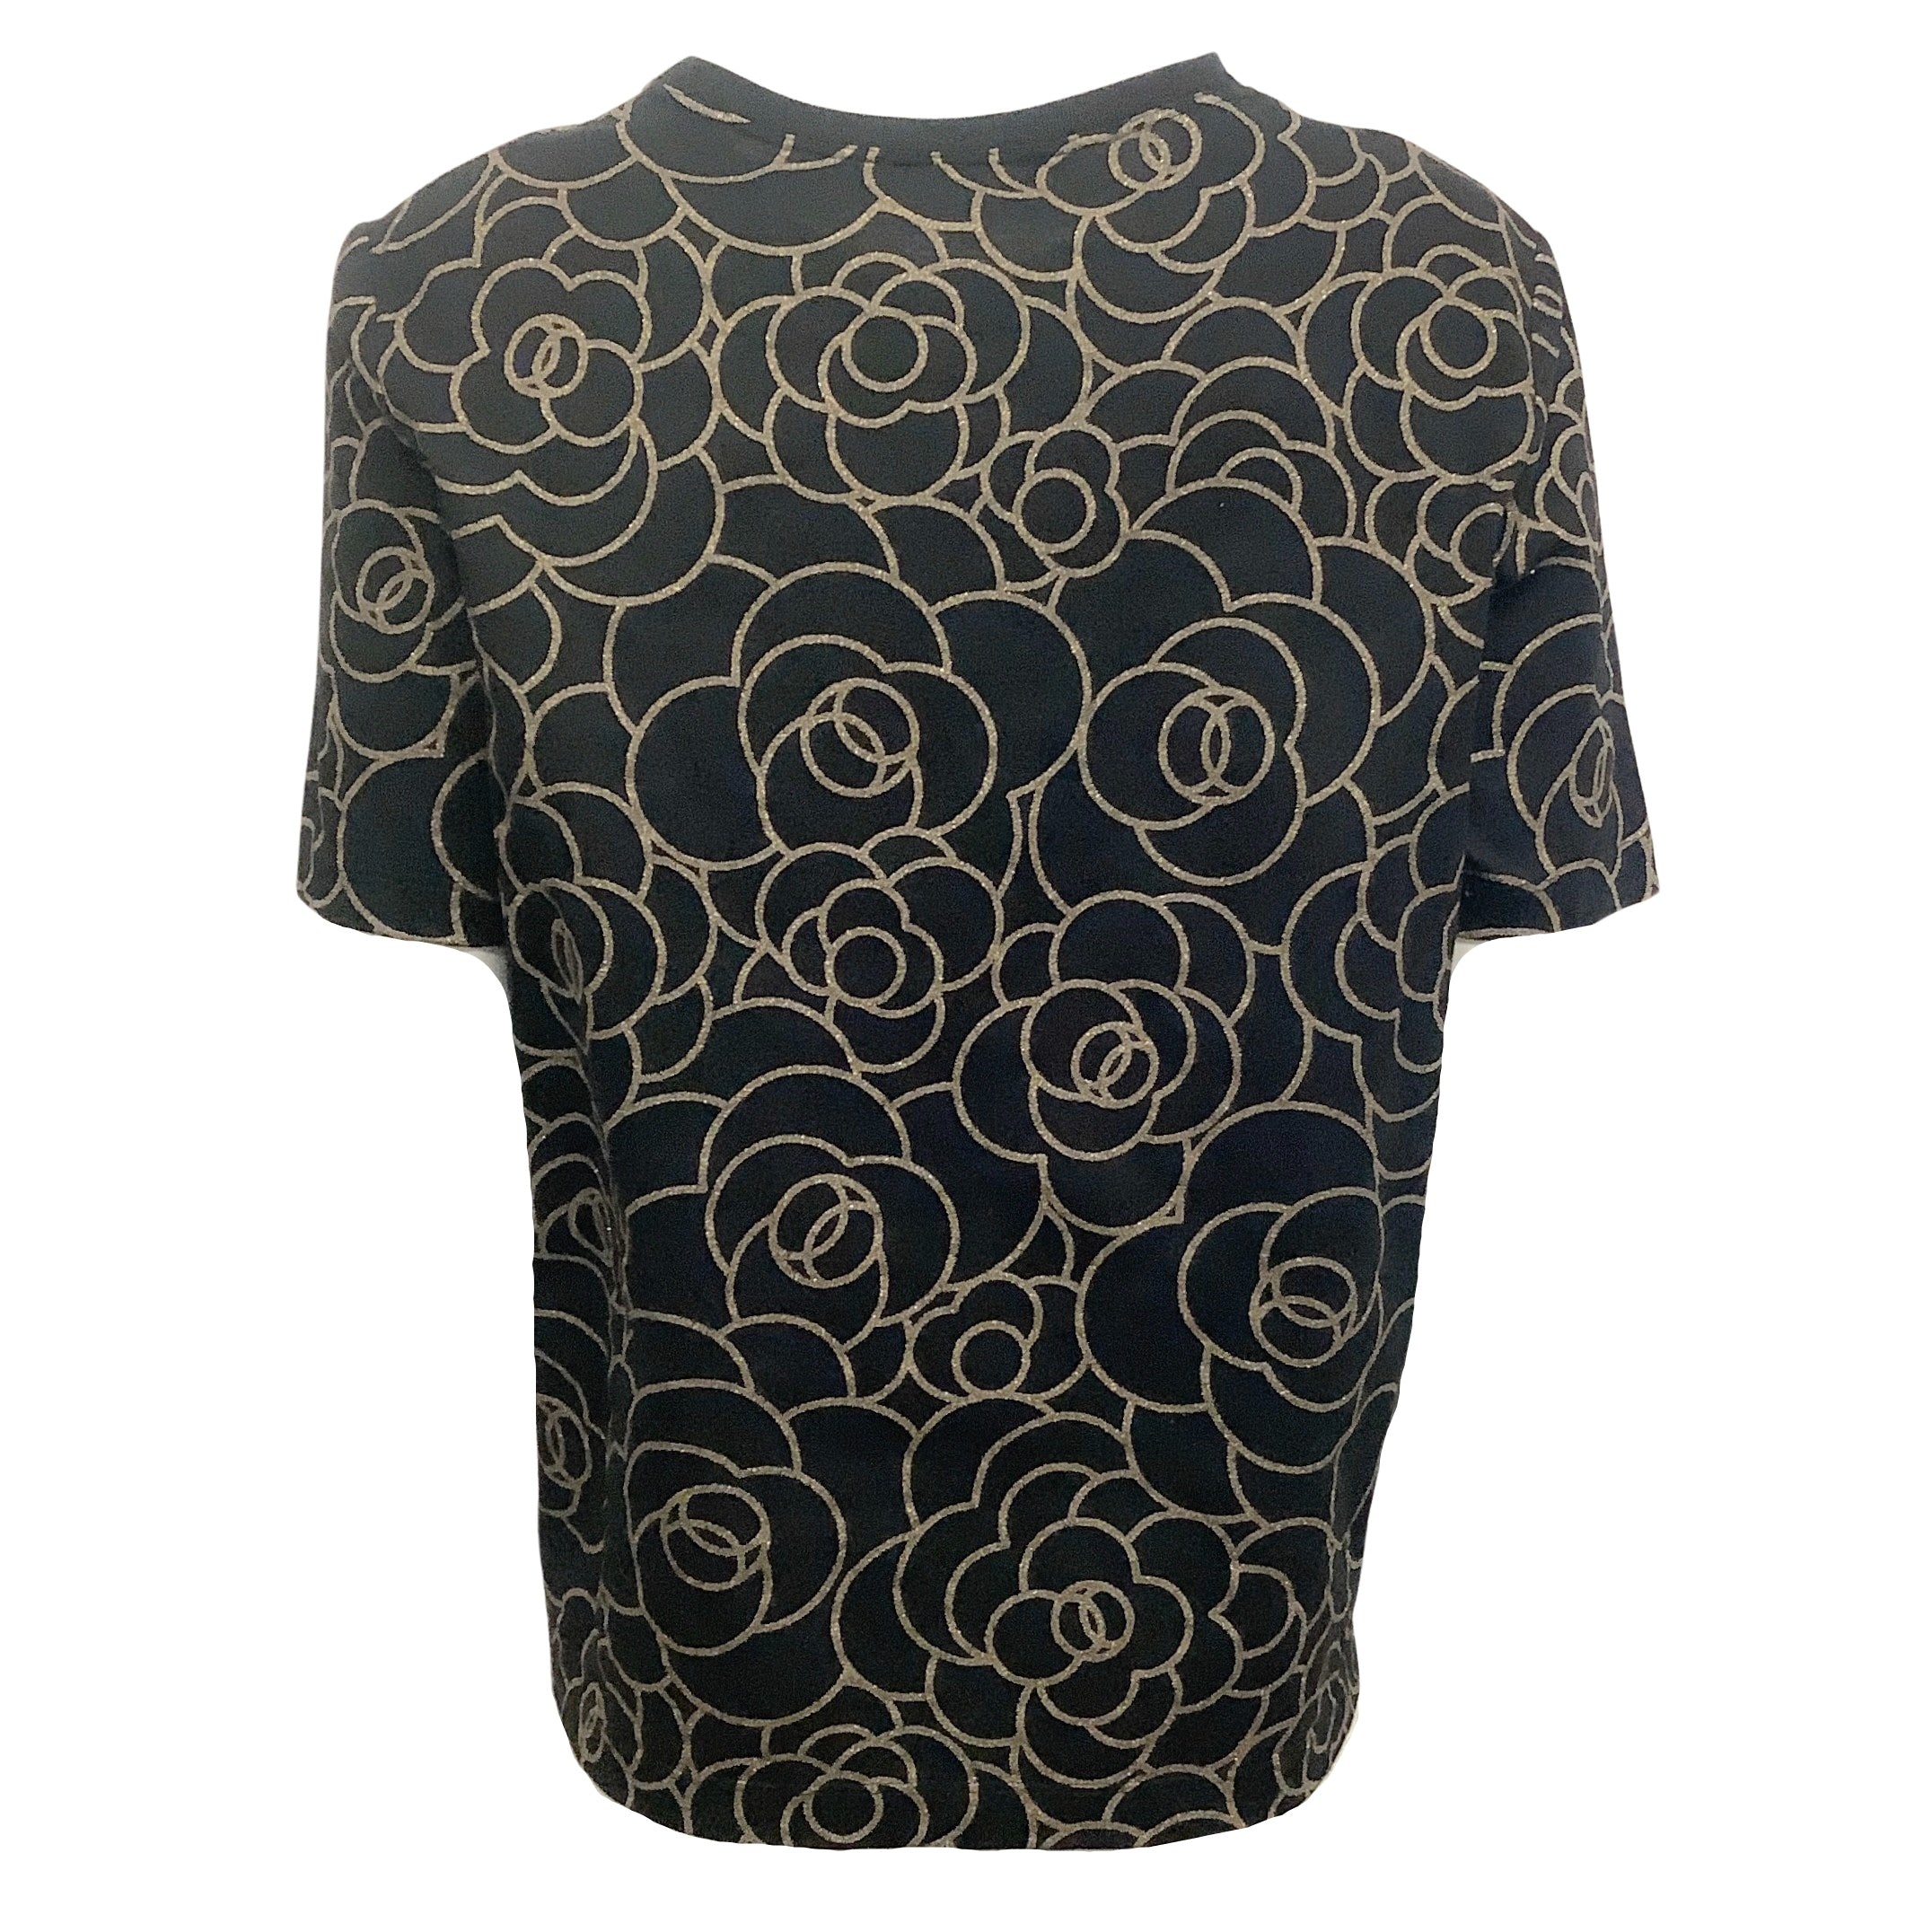 Chanel Black / Gold Camellia Print Short Sleeved Tee Shirt